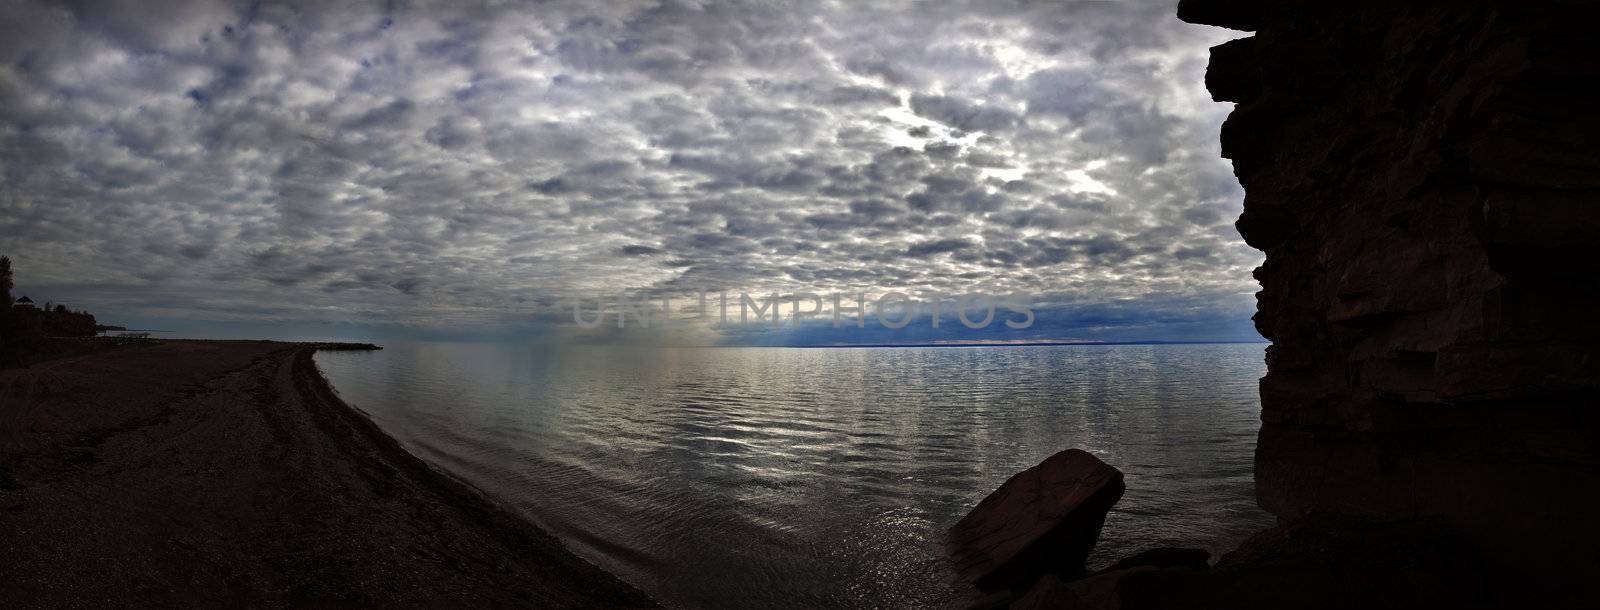 Caplan, Qc sea shore panorama of Gaspe Peninsula
 by aetb